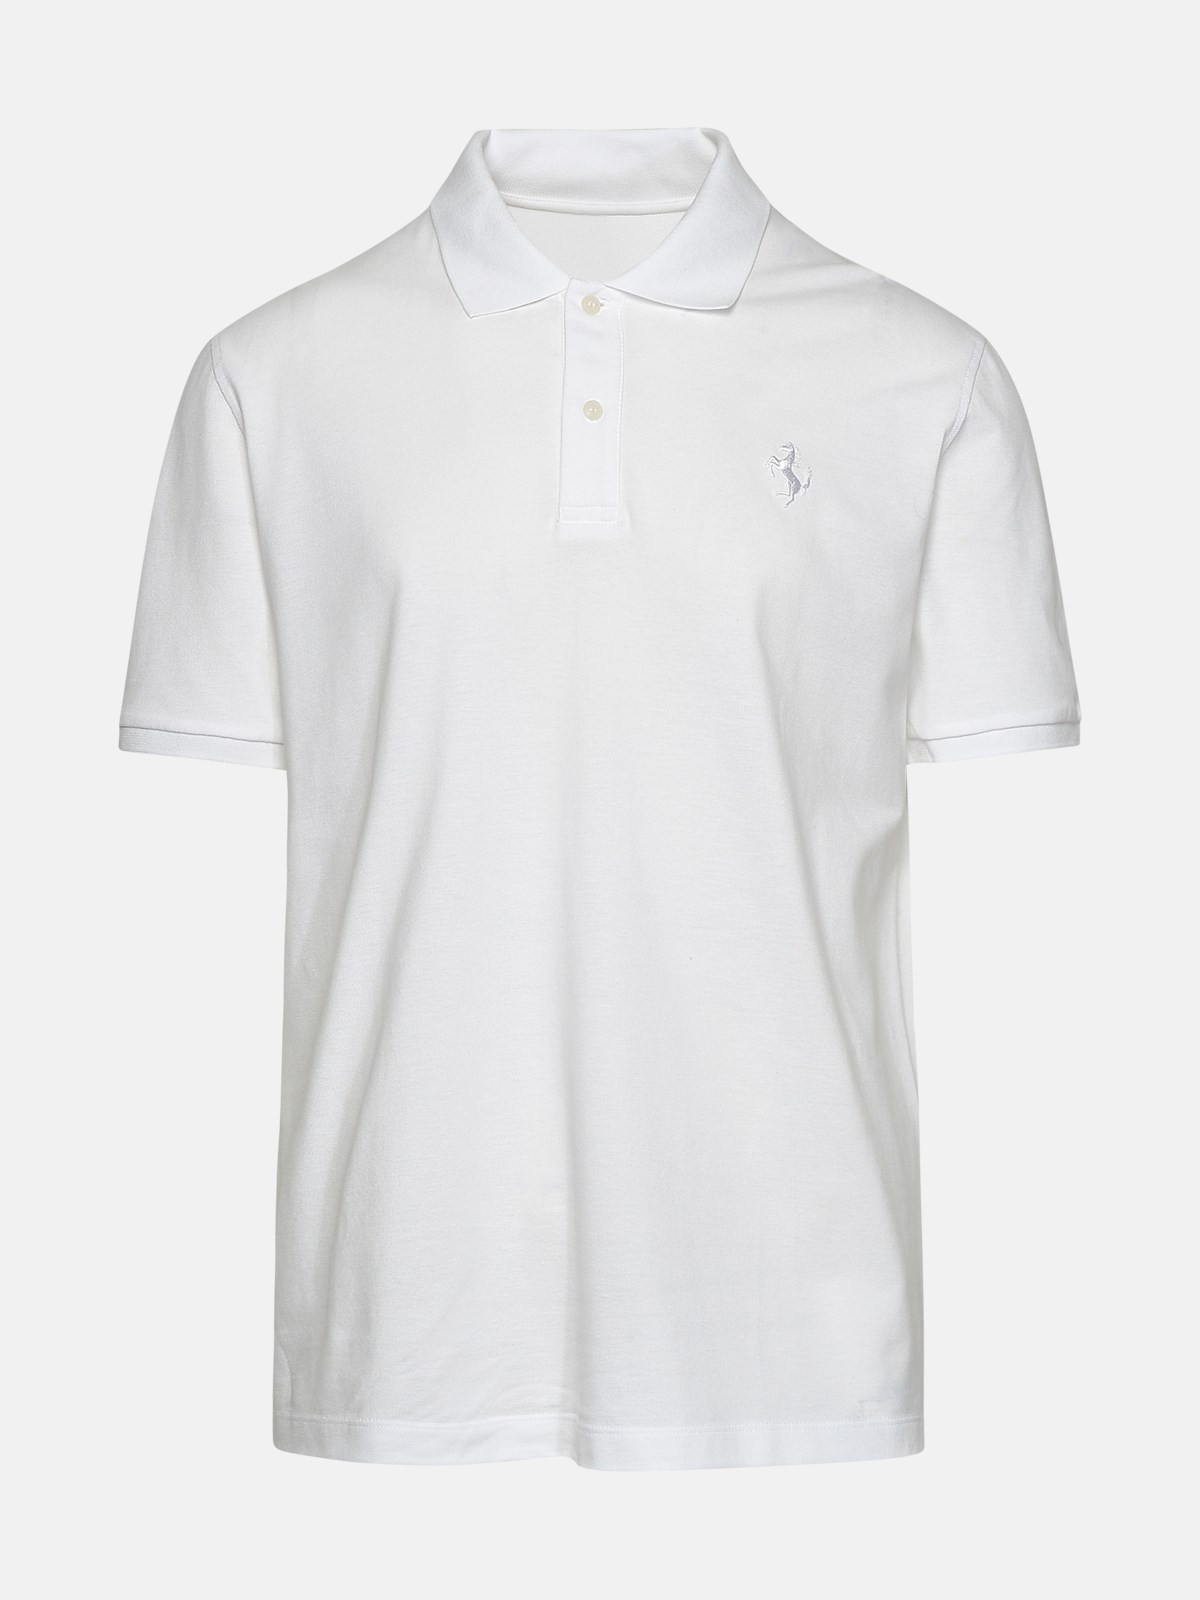 Ferrari White Cotton Blend Polo Shirt